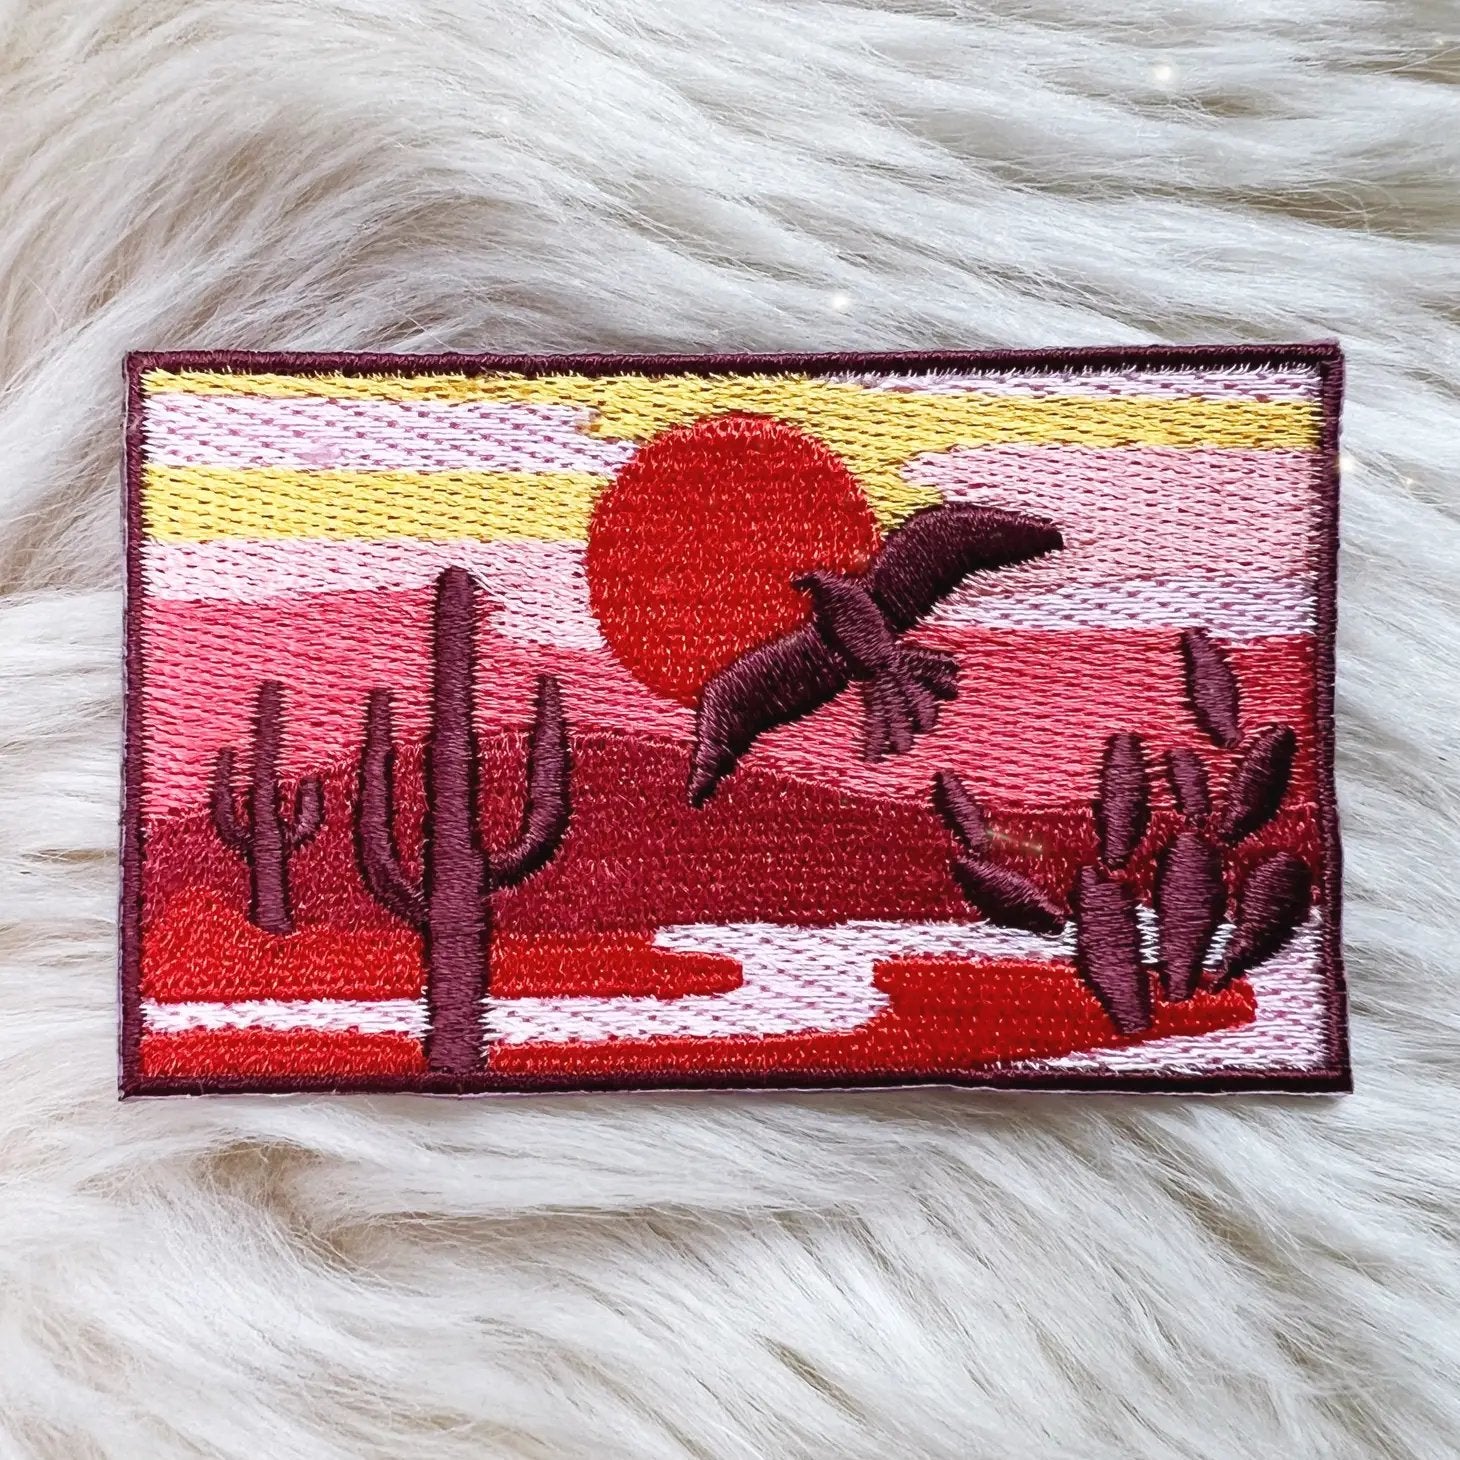 Desert Sunset Patch - Patch